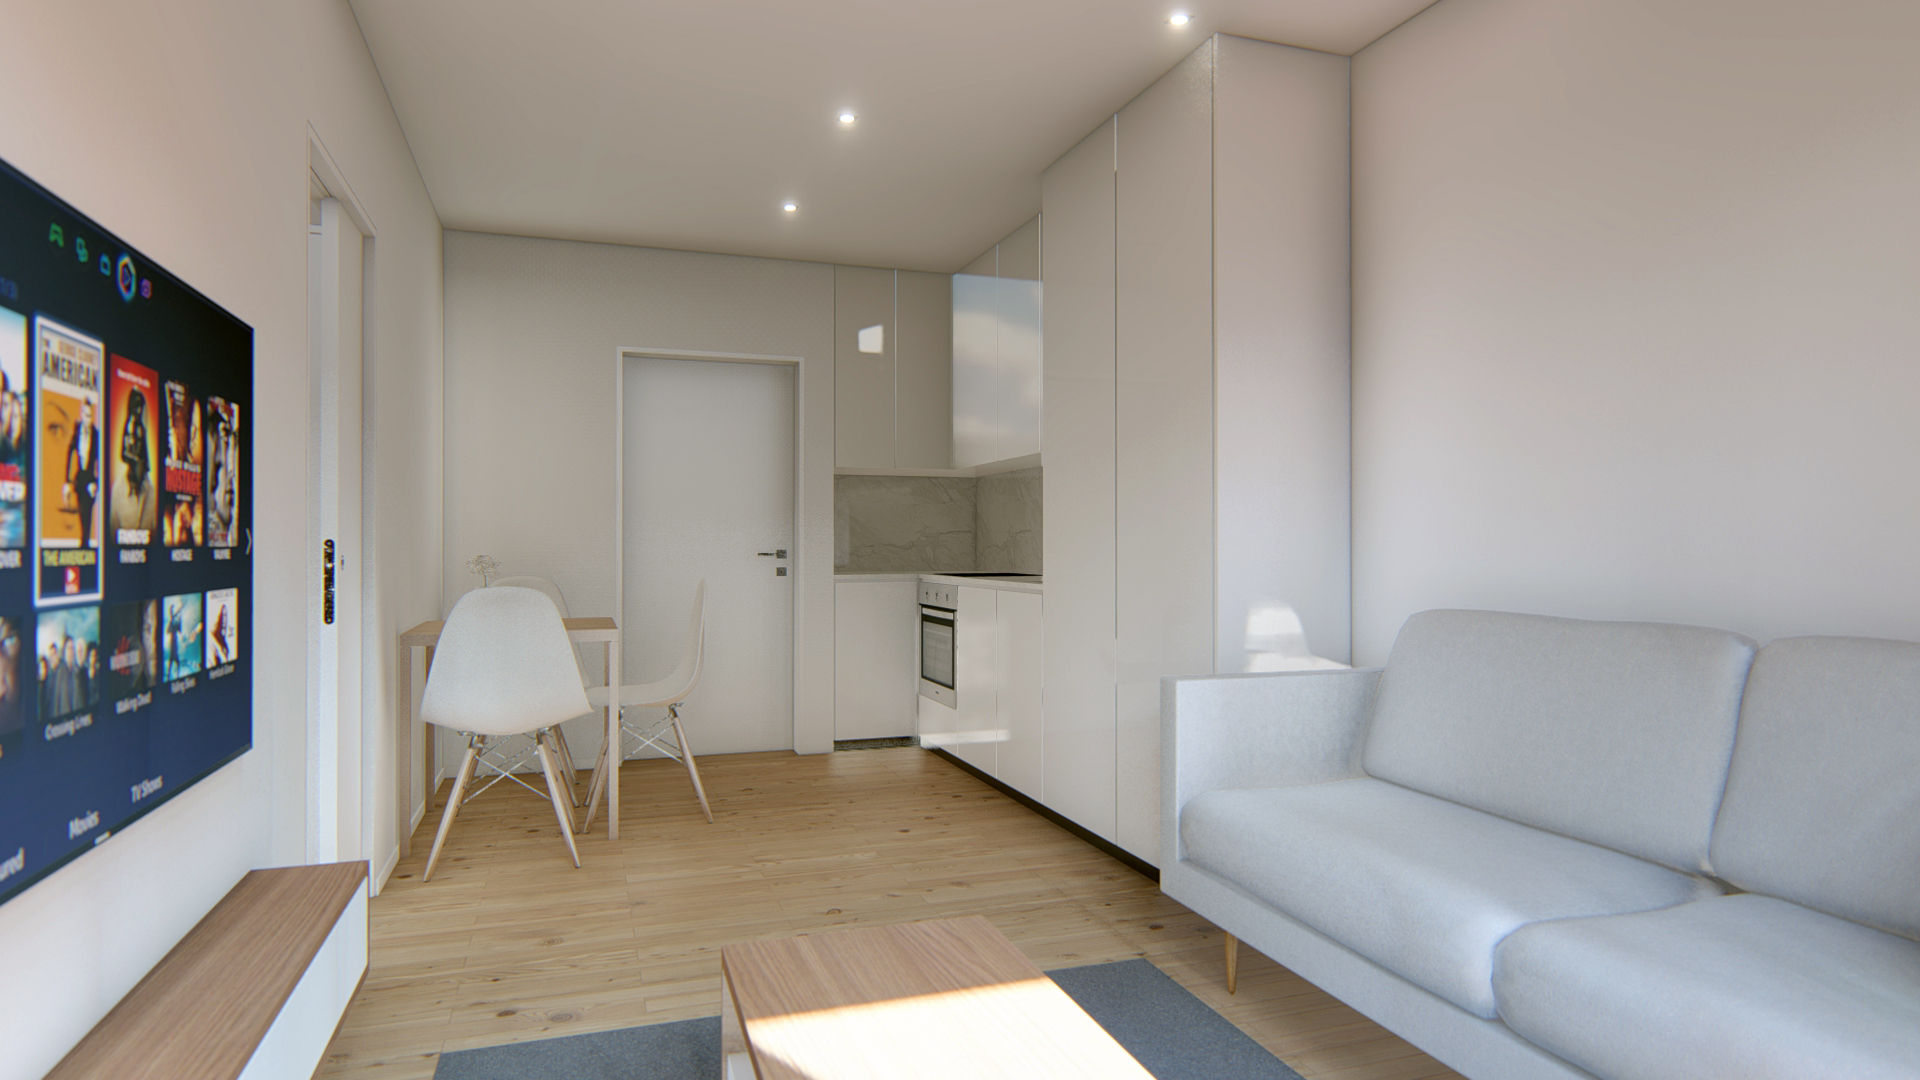 Sala kitchenette - maquete 3D homify investimento, duplex, venda dos imóveis, renovado, ARU, Porto, golden visa, projeto